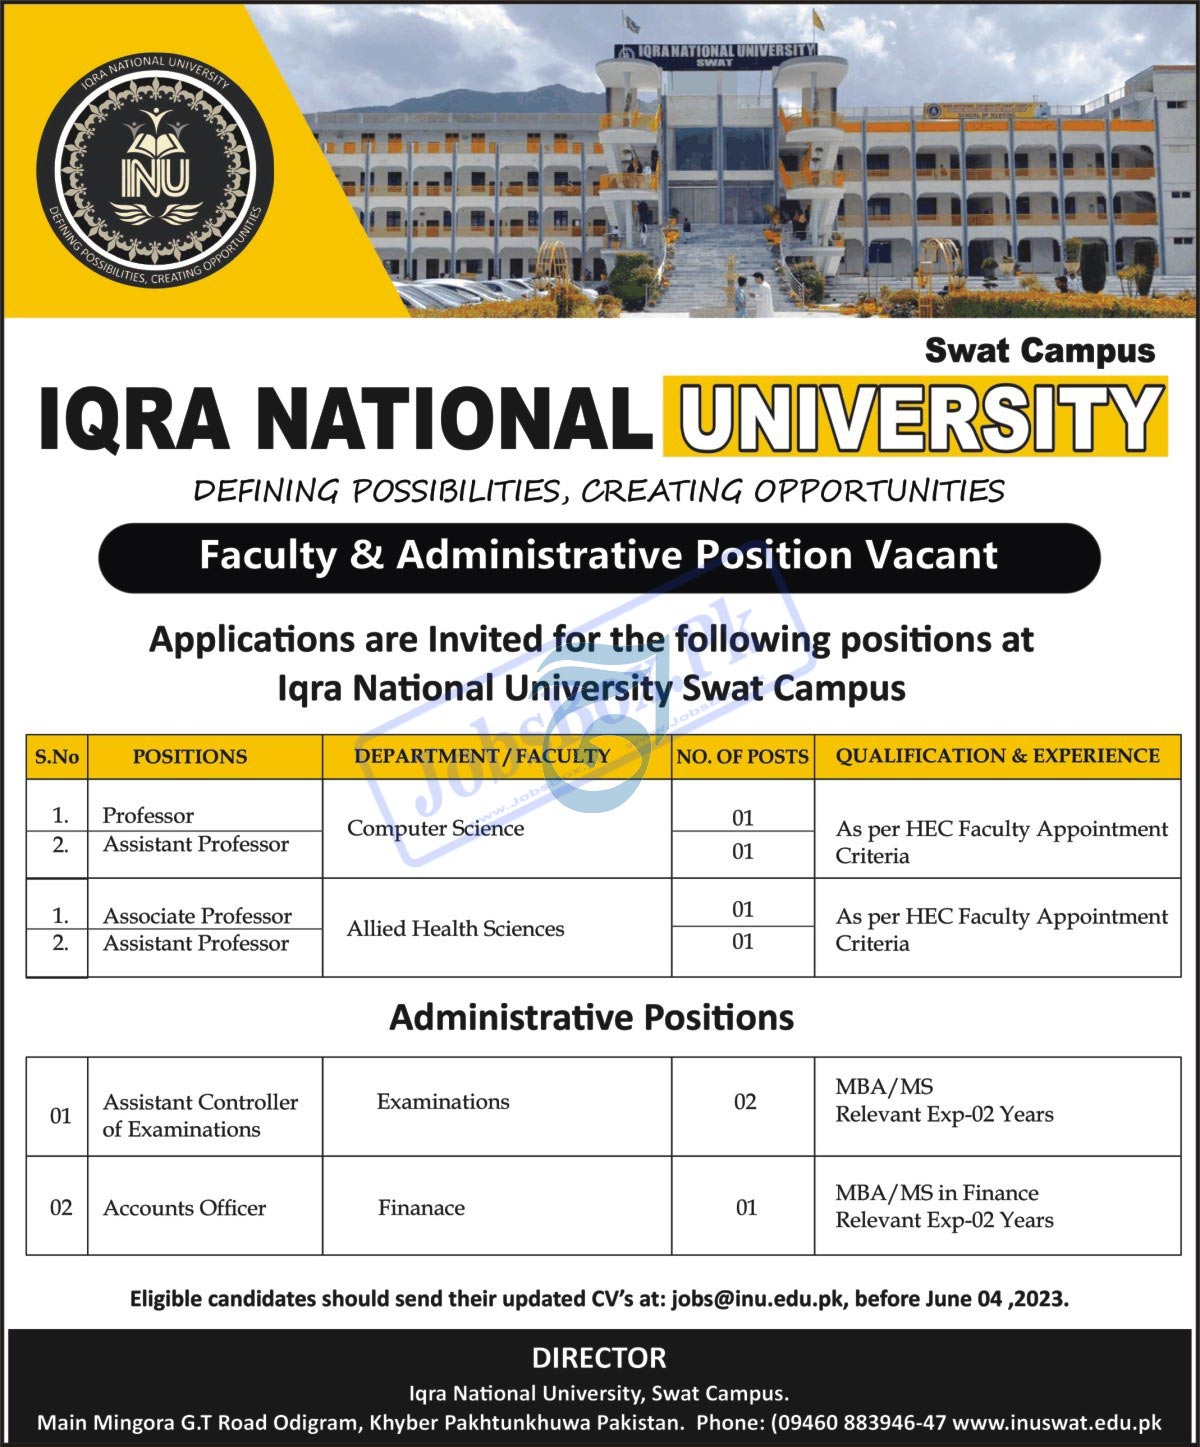 Iqra National University Swat Campus Jobs 2023